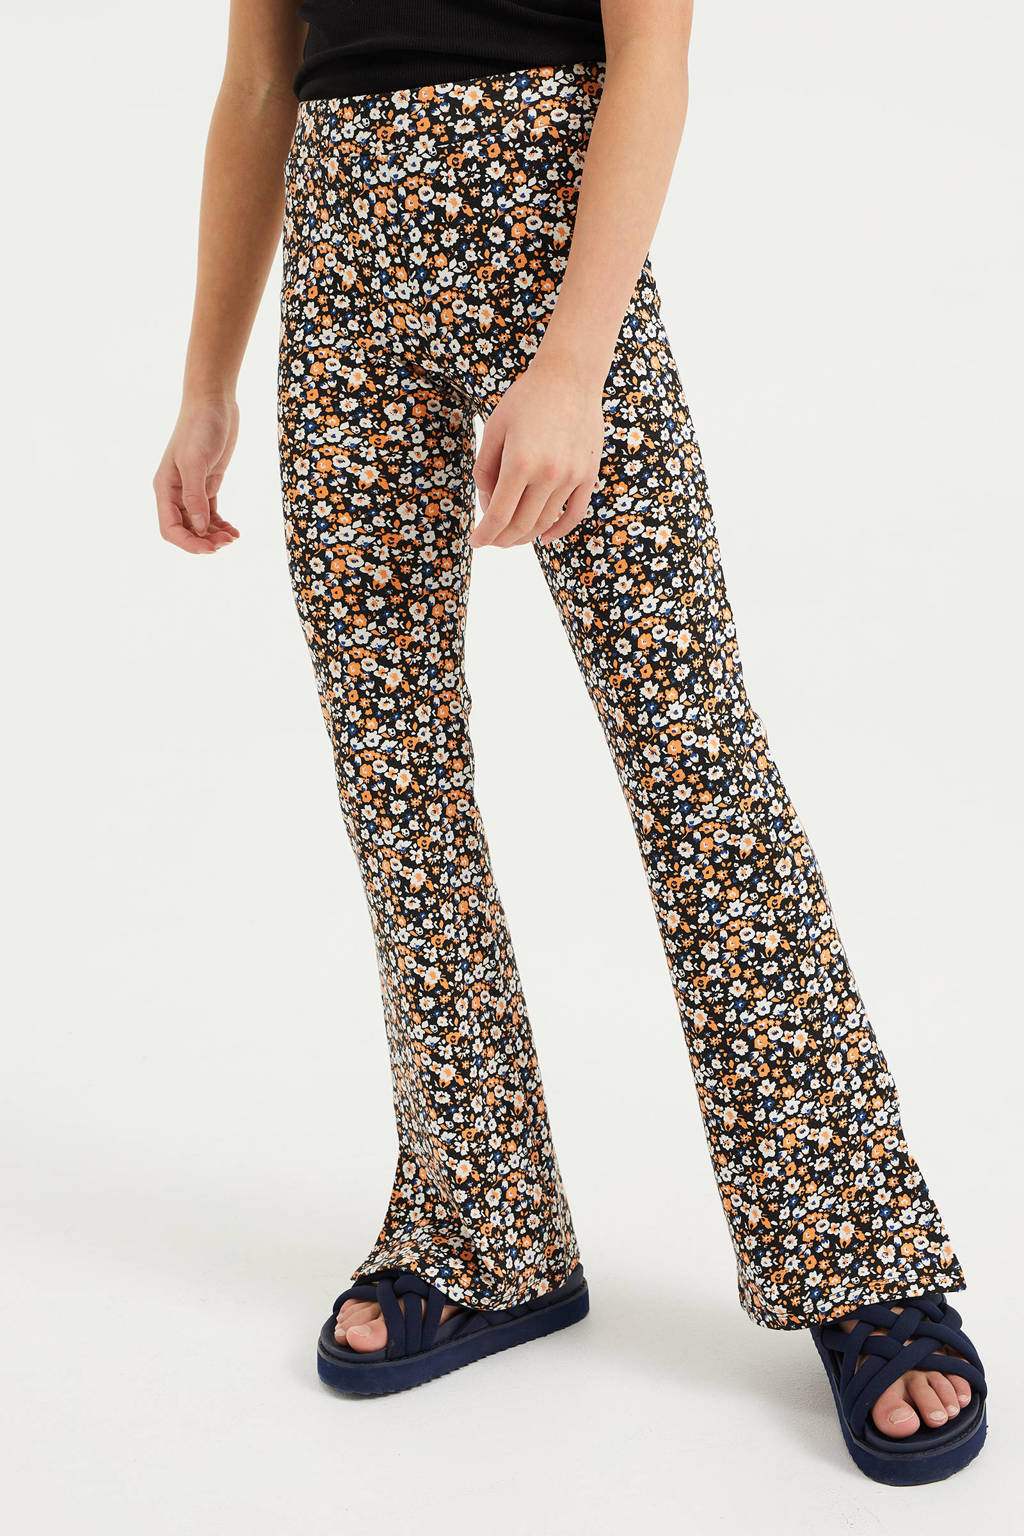 Gooey Recensent Avonturier WE Fashion flared broek met all over print zwart/oranje/blauw | wehkamp